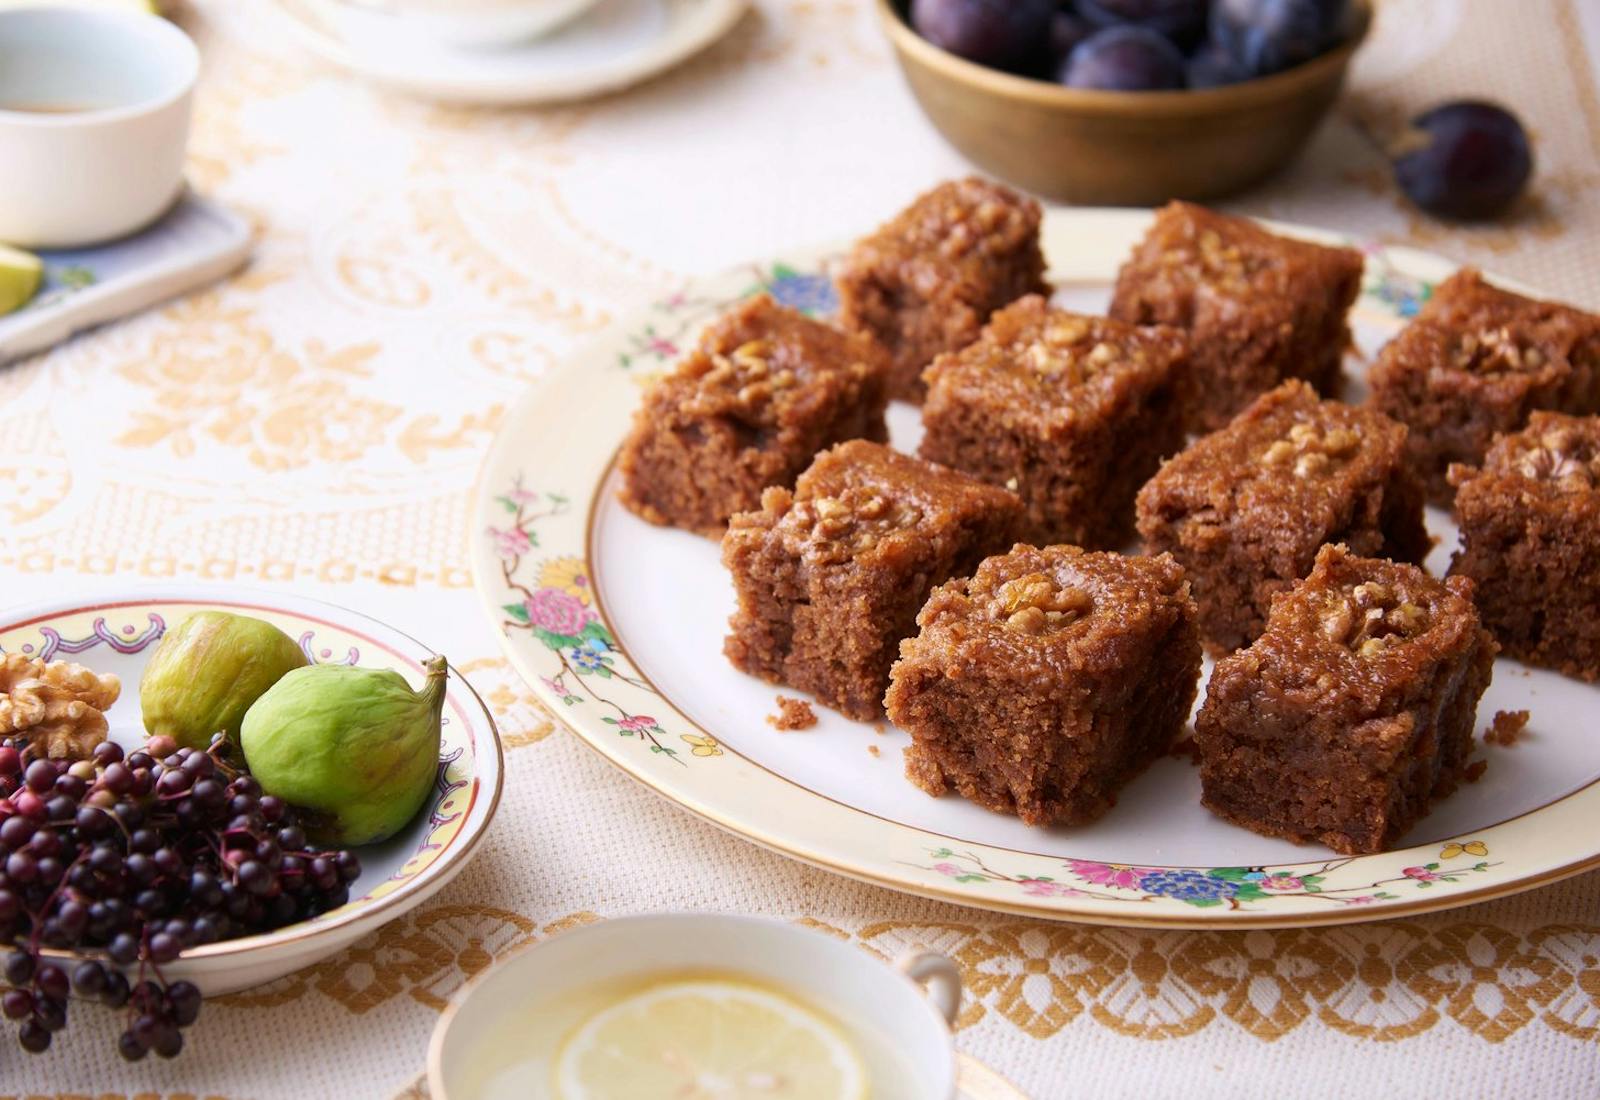 Portions of honey walnut cake on floral dish alongside plates of figs, walnuts and elderberries and mugs of lemon tea.